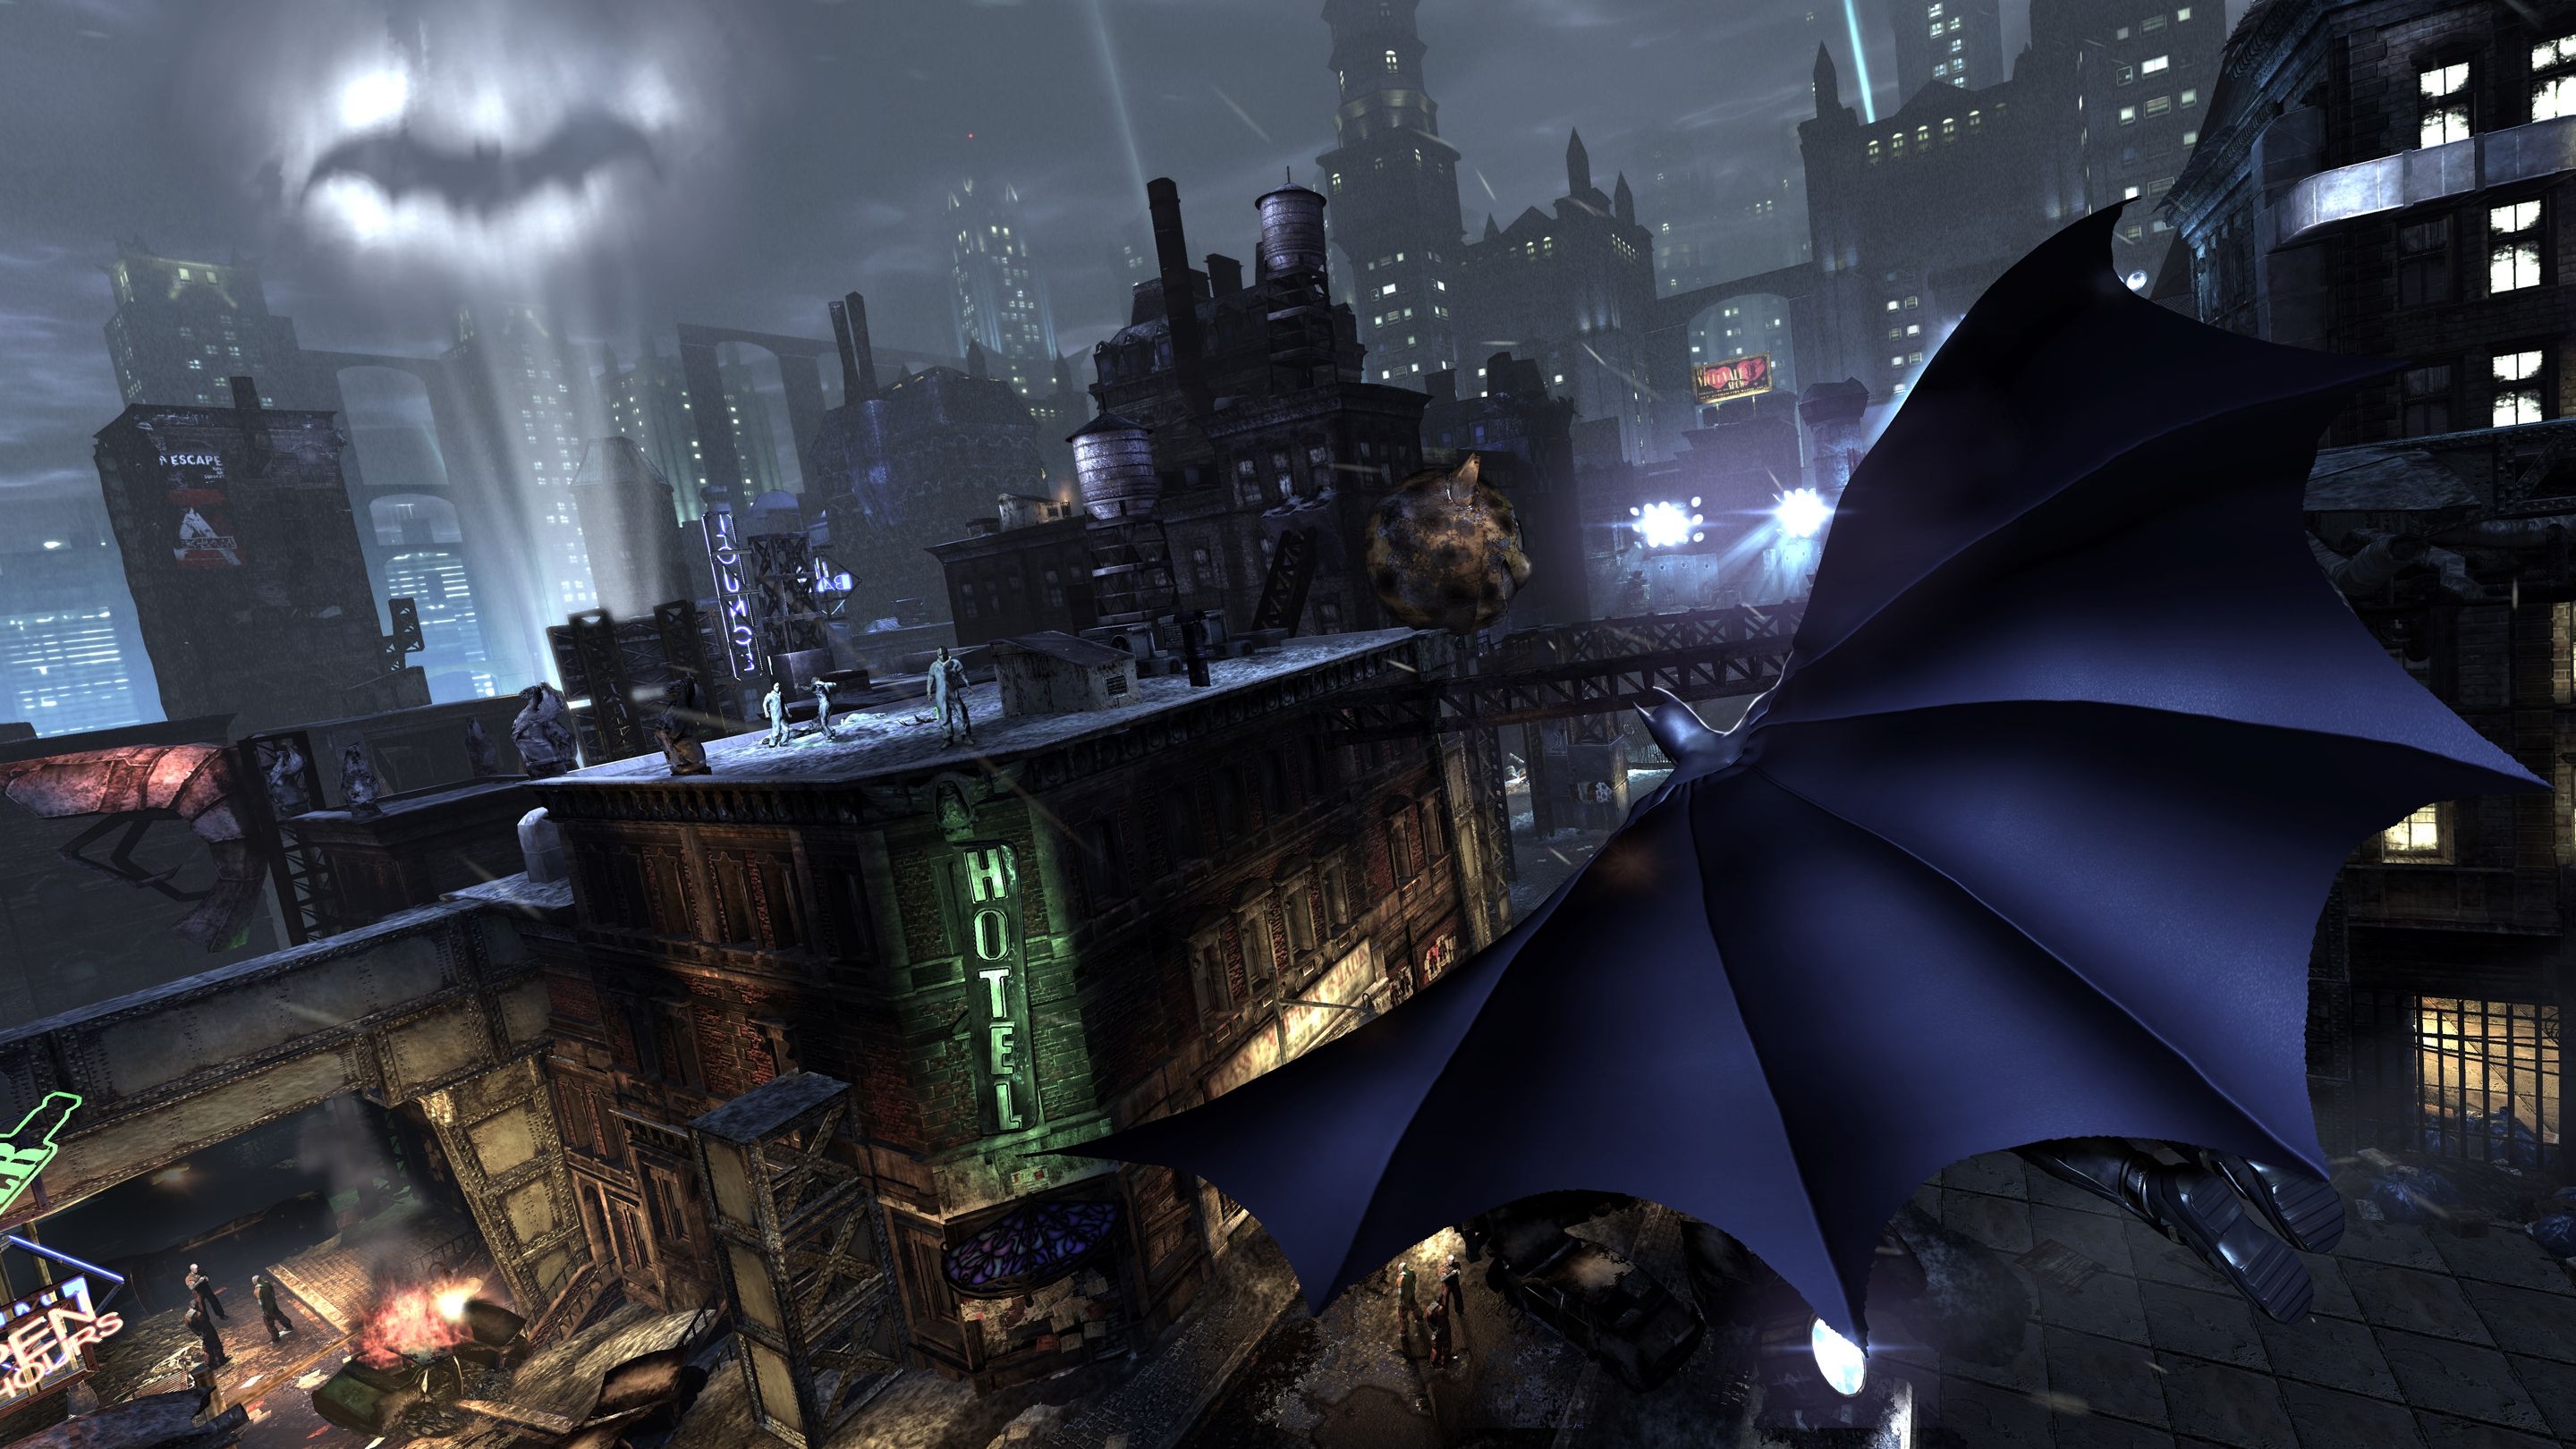 Baixar papéis de parede de desktop Batman: Origens De Arkham HD